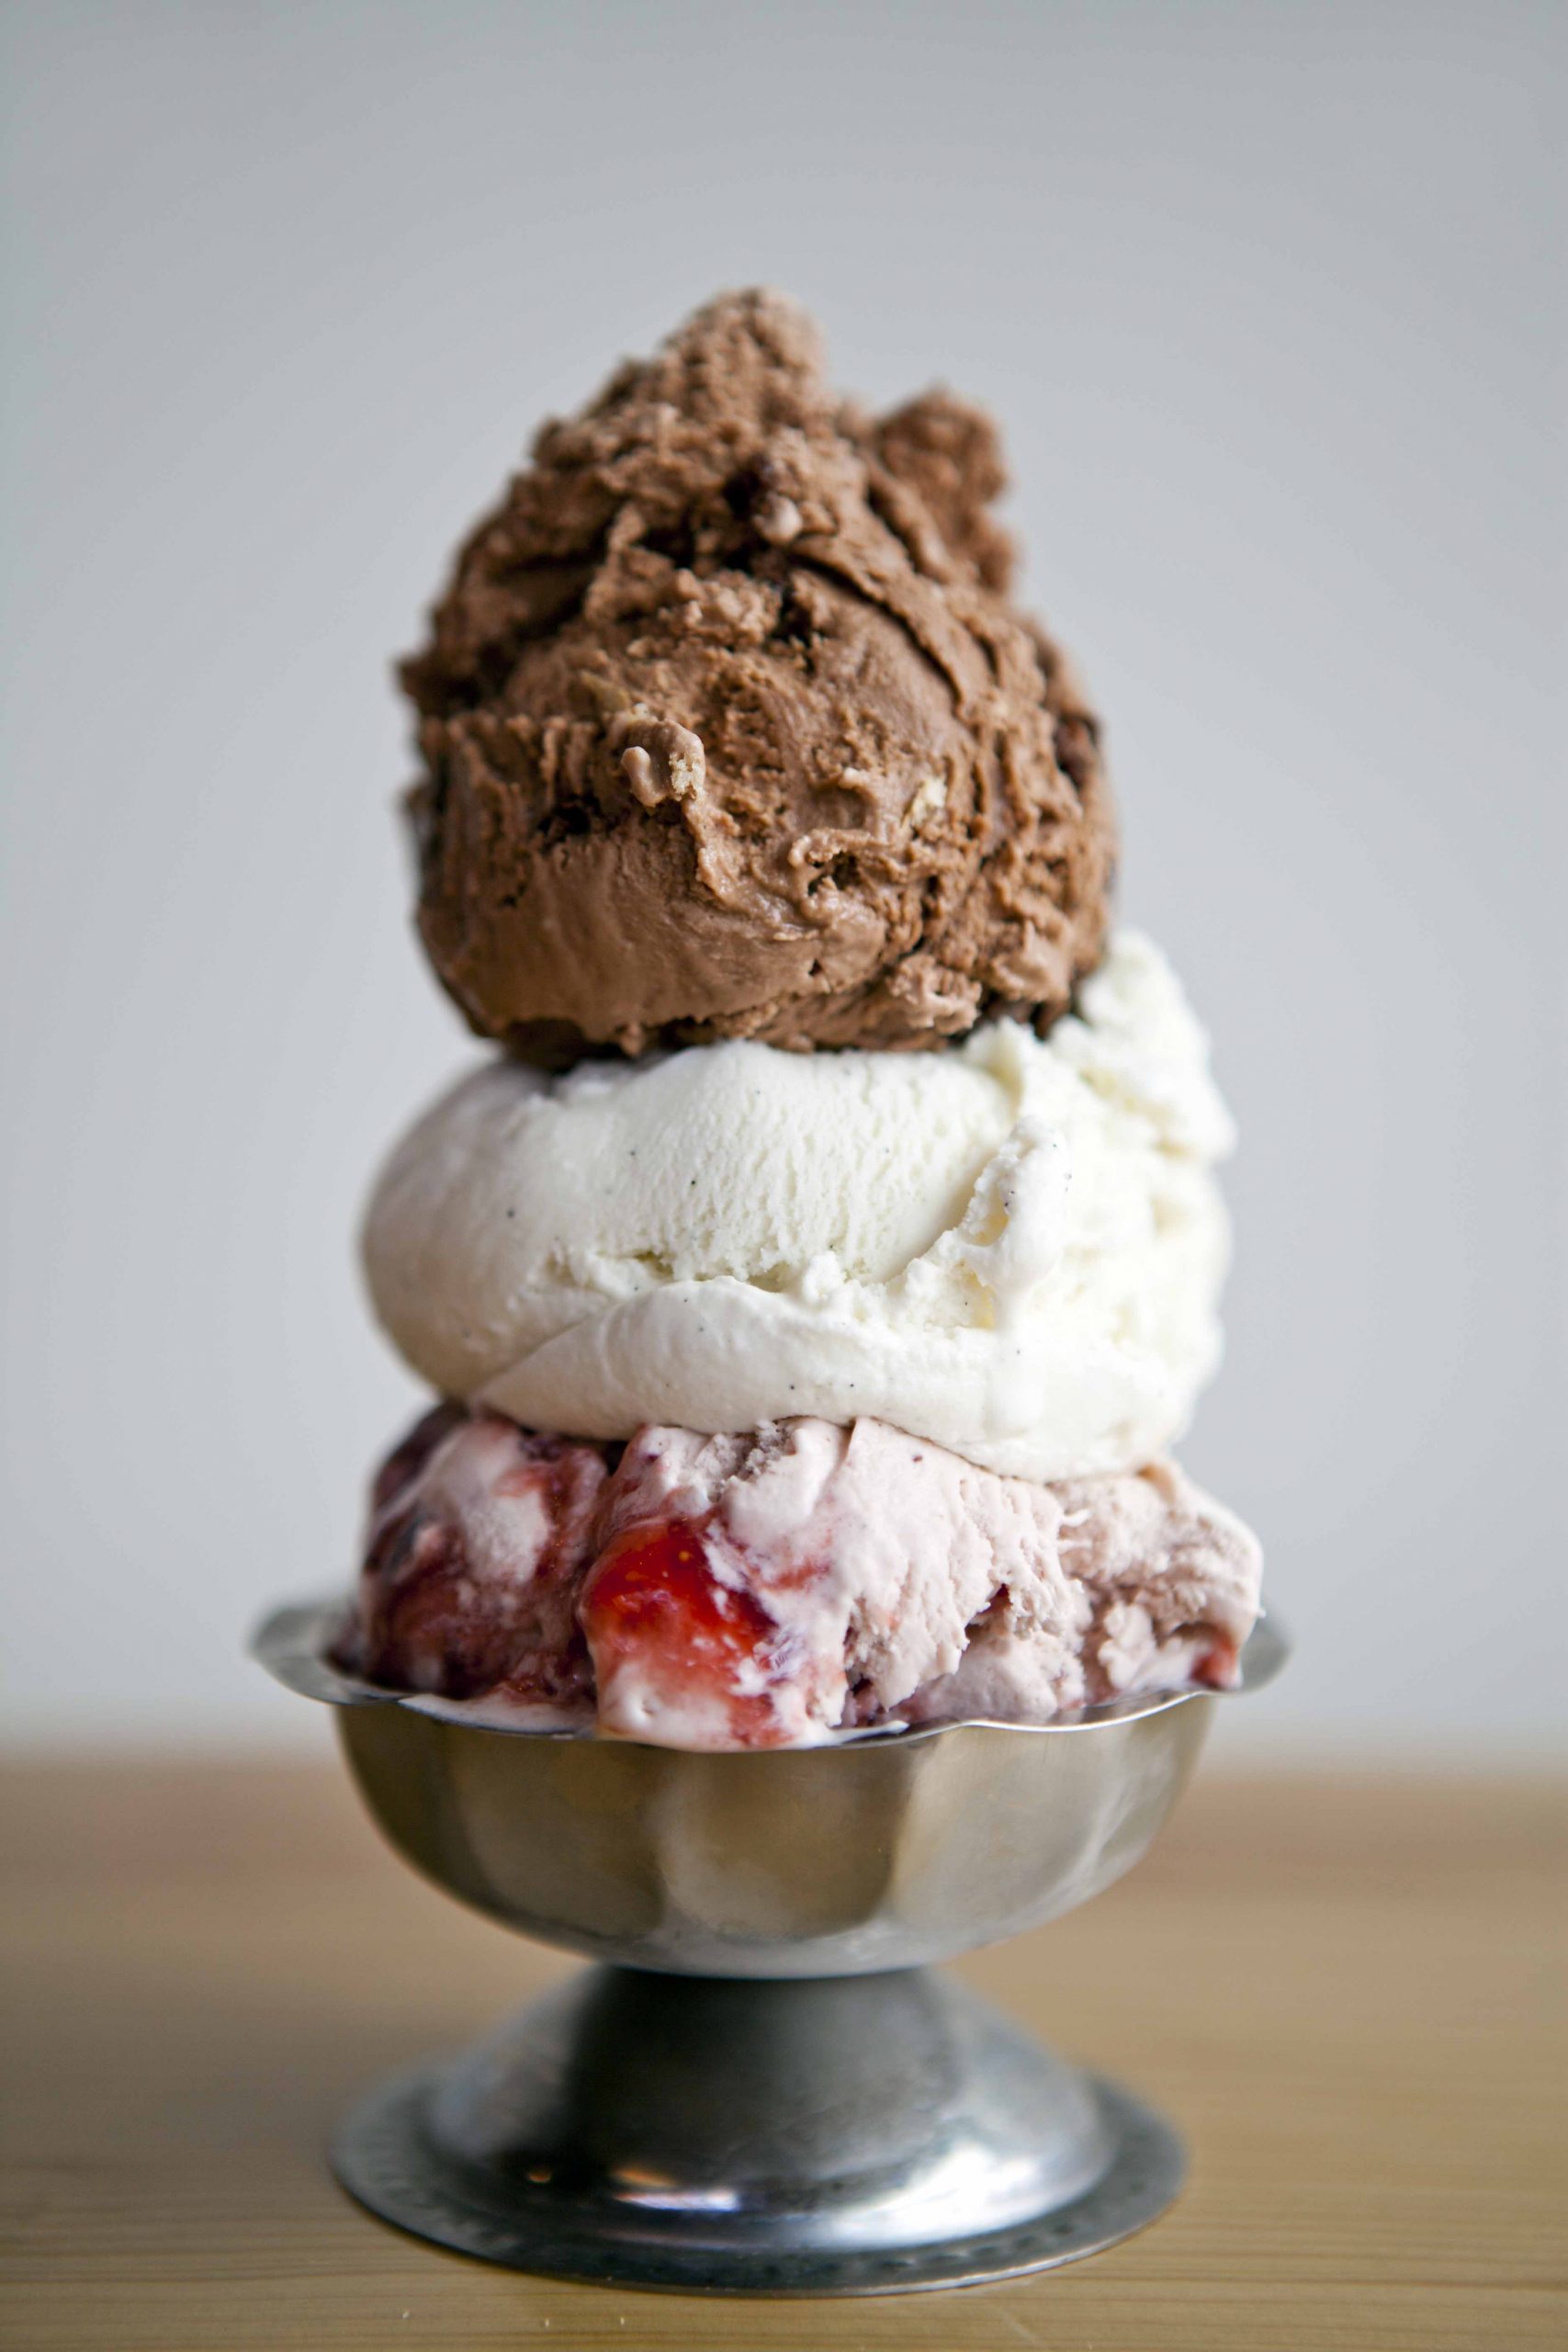 Salt & Straw: Get the Inside Scoop on Savory Ice Cream Flavors